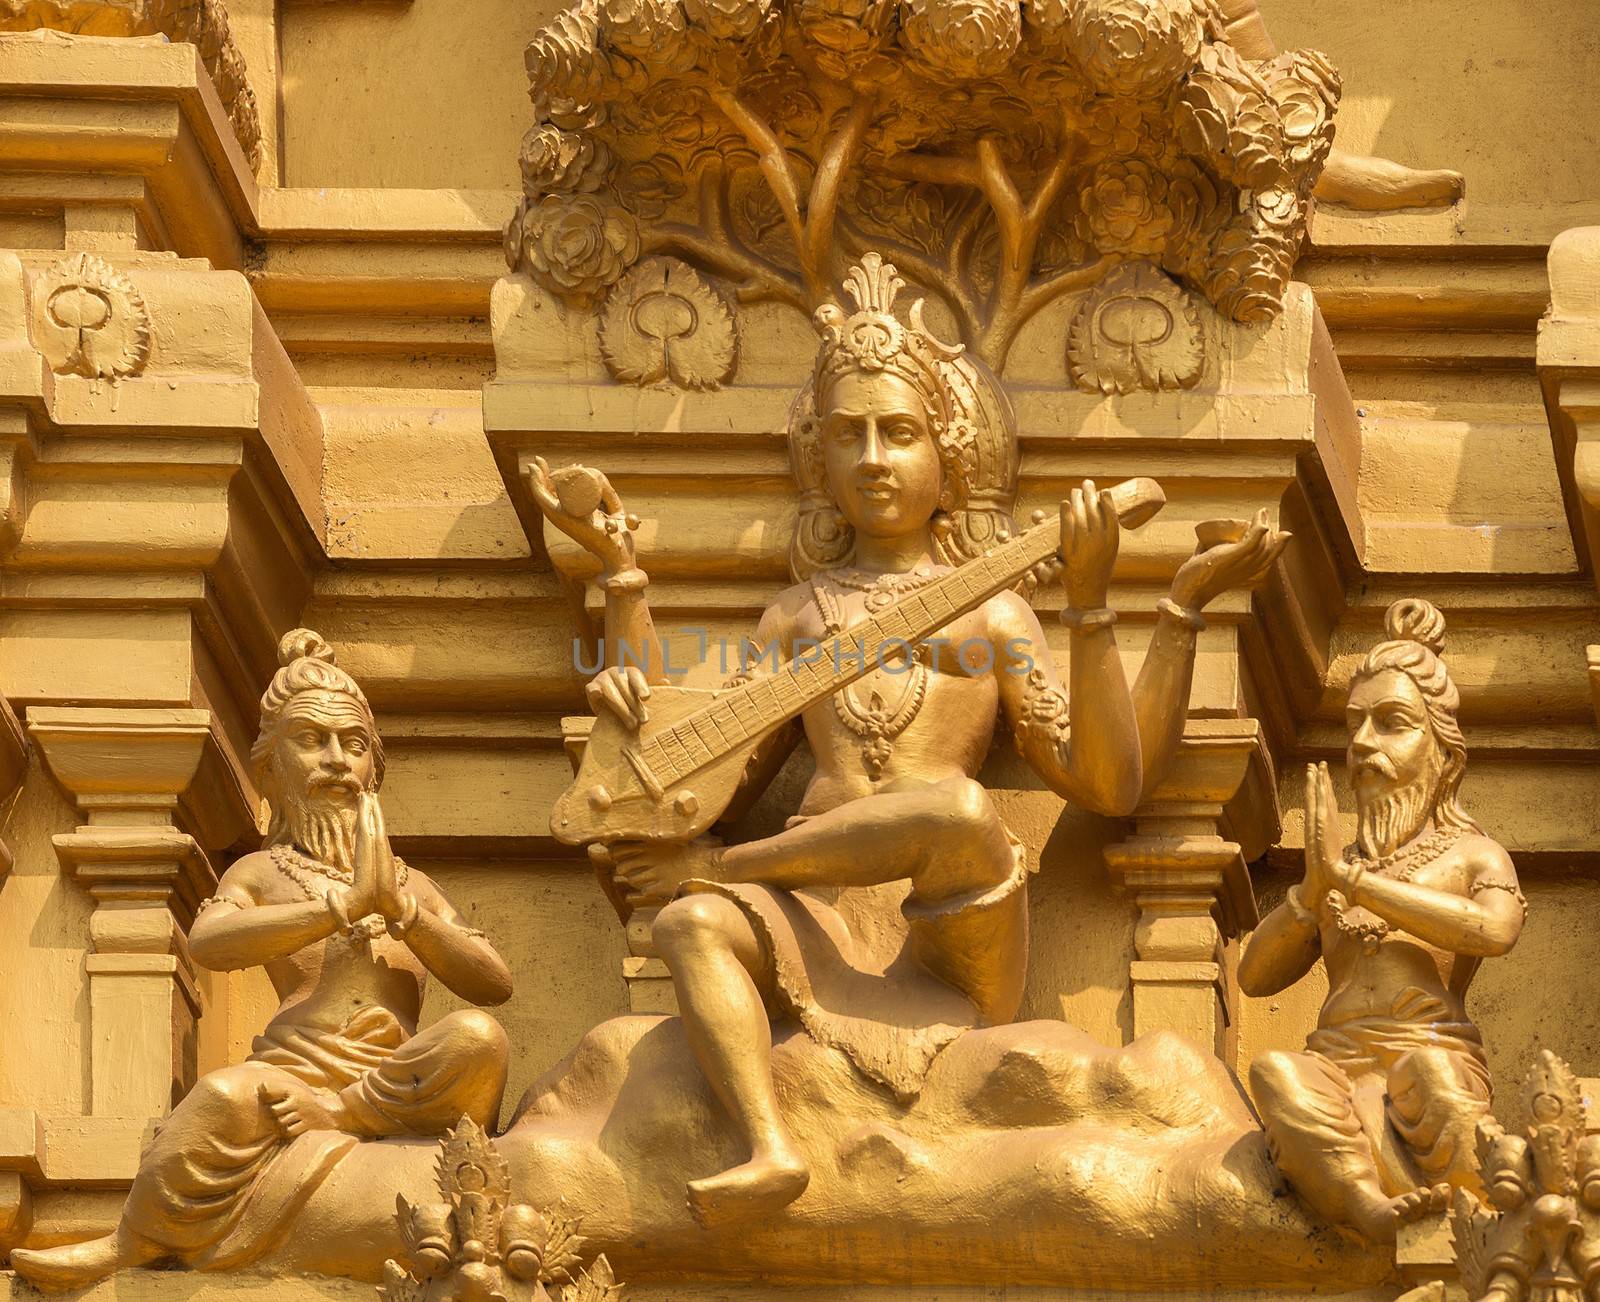 Detail of statues on the golden entrance tower at Sri Naheshwara in Bengaluru: Saraswati, goddess of knowledge and education.